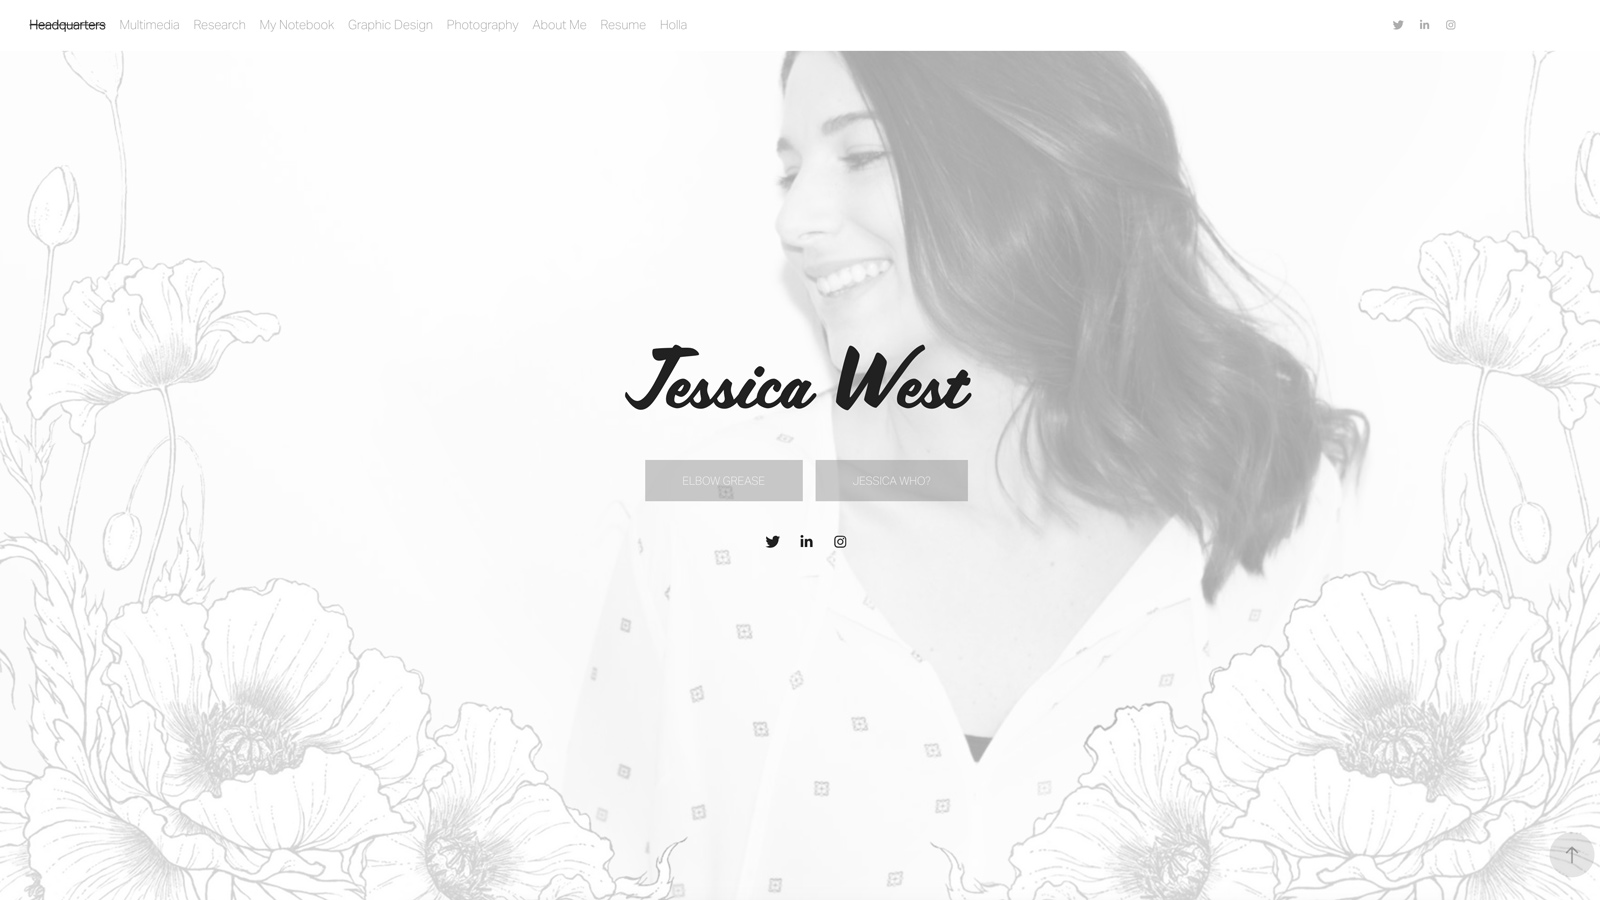 Jessica West